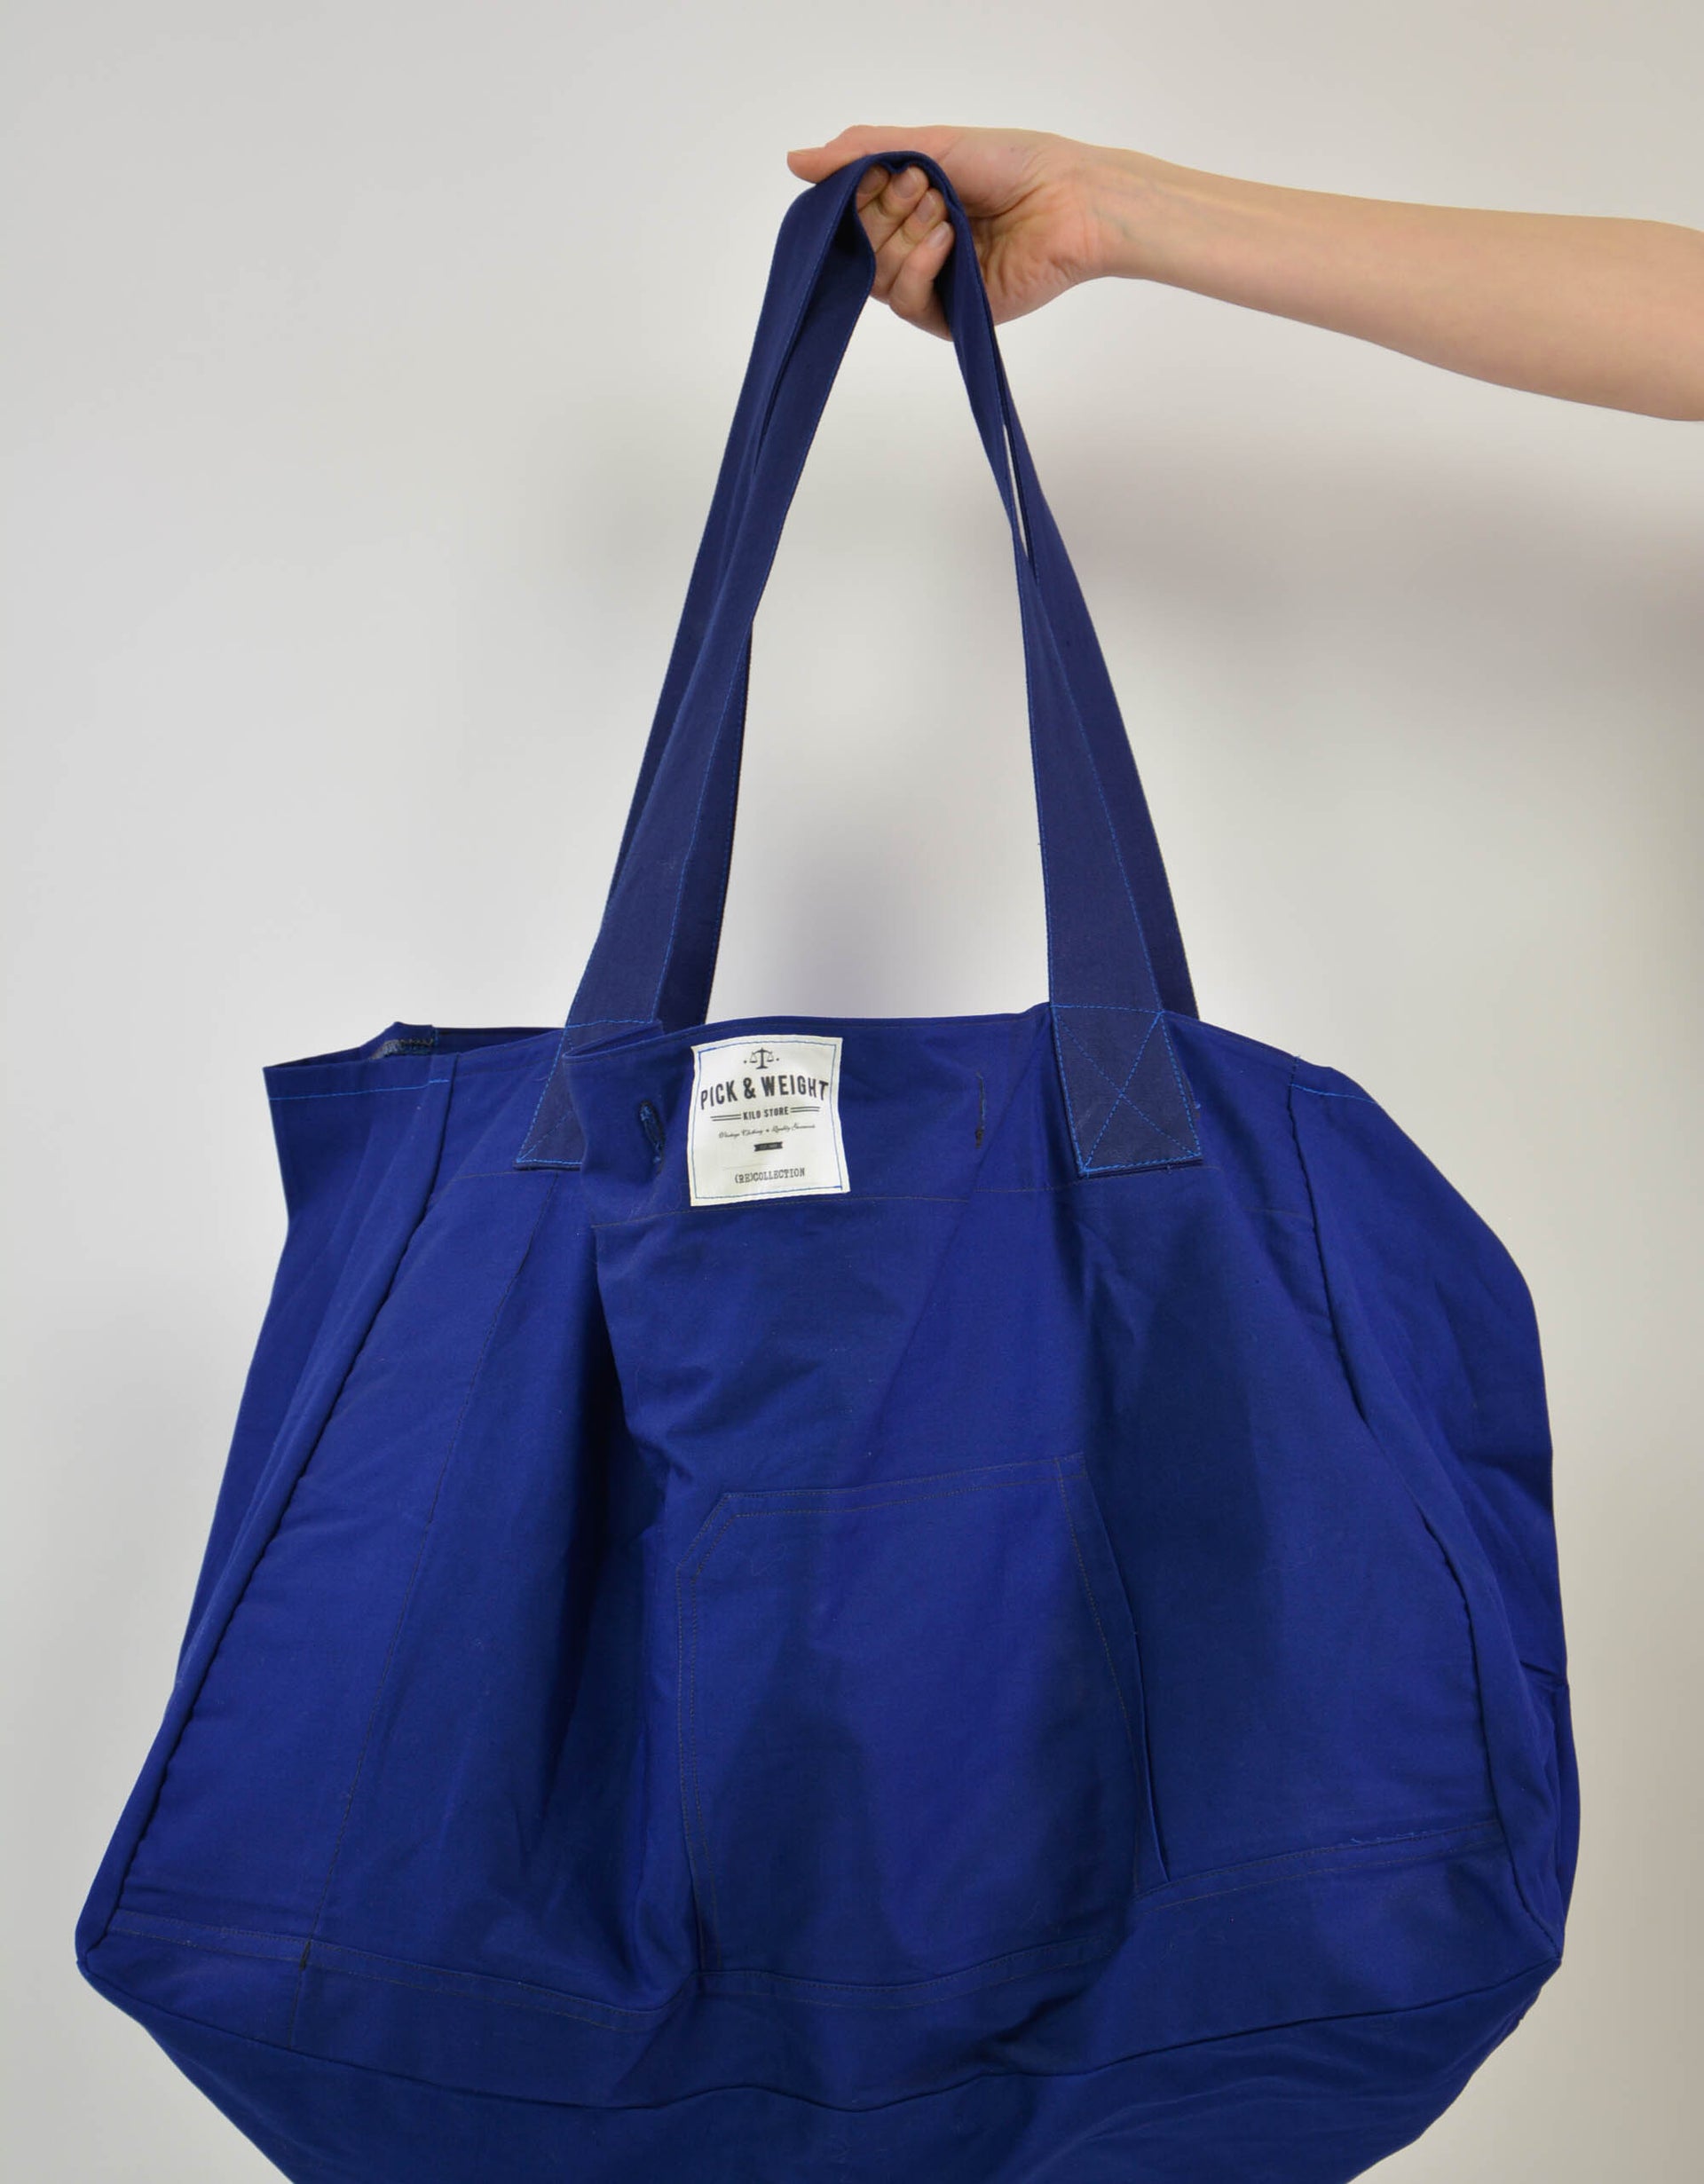 (RE)CO Shopping Bag - PICKNWEIGHT - VINTAGE KILO STORE